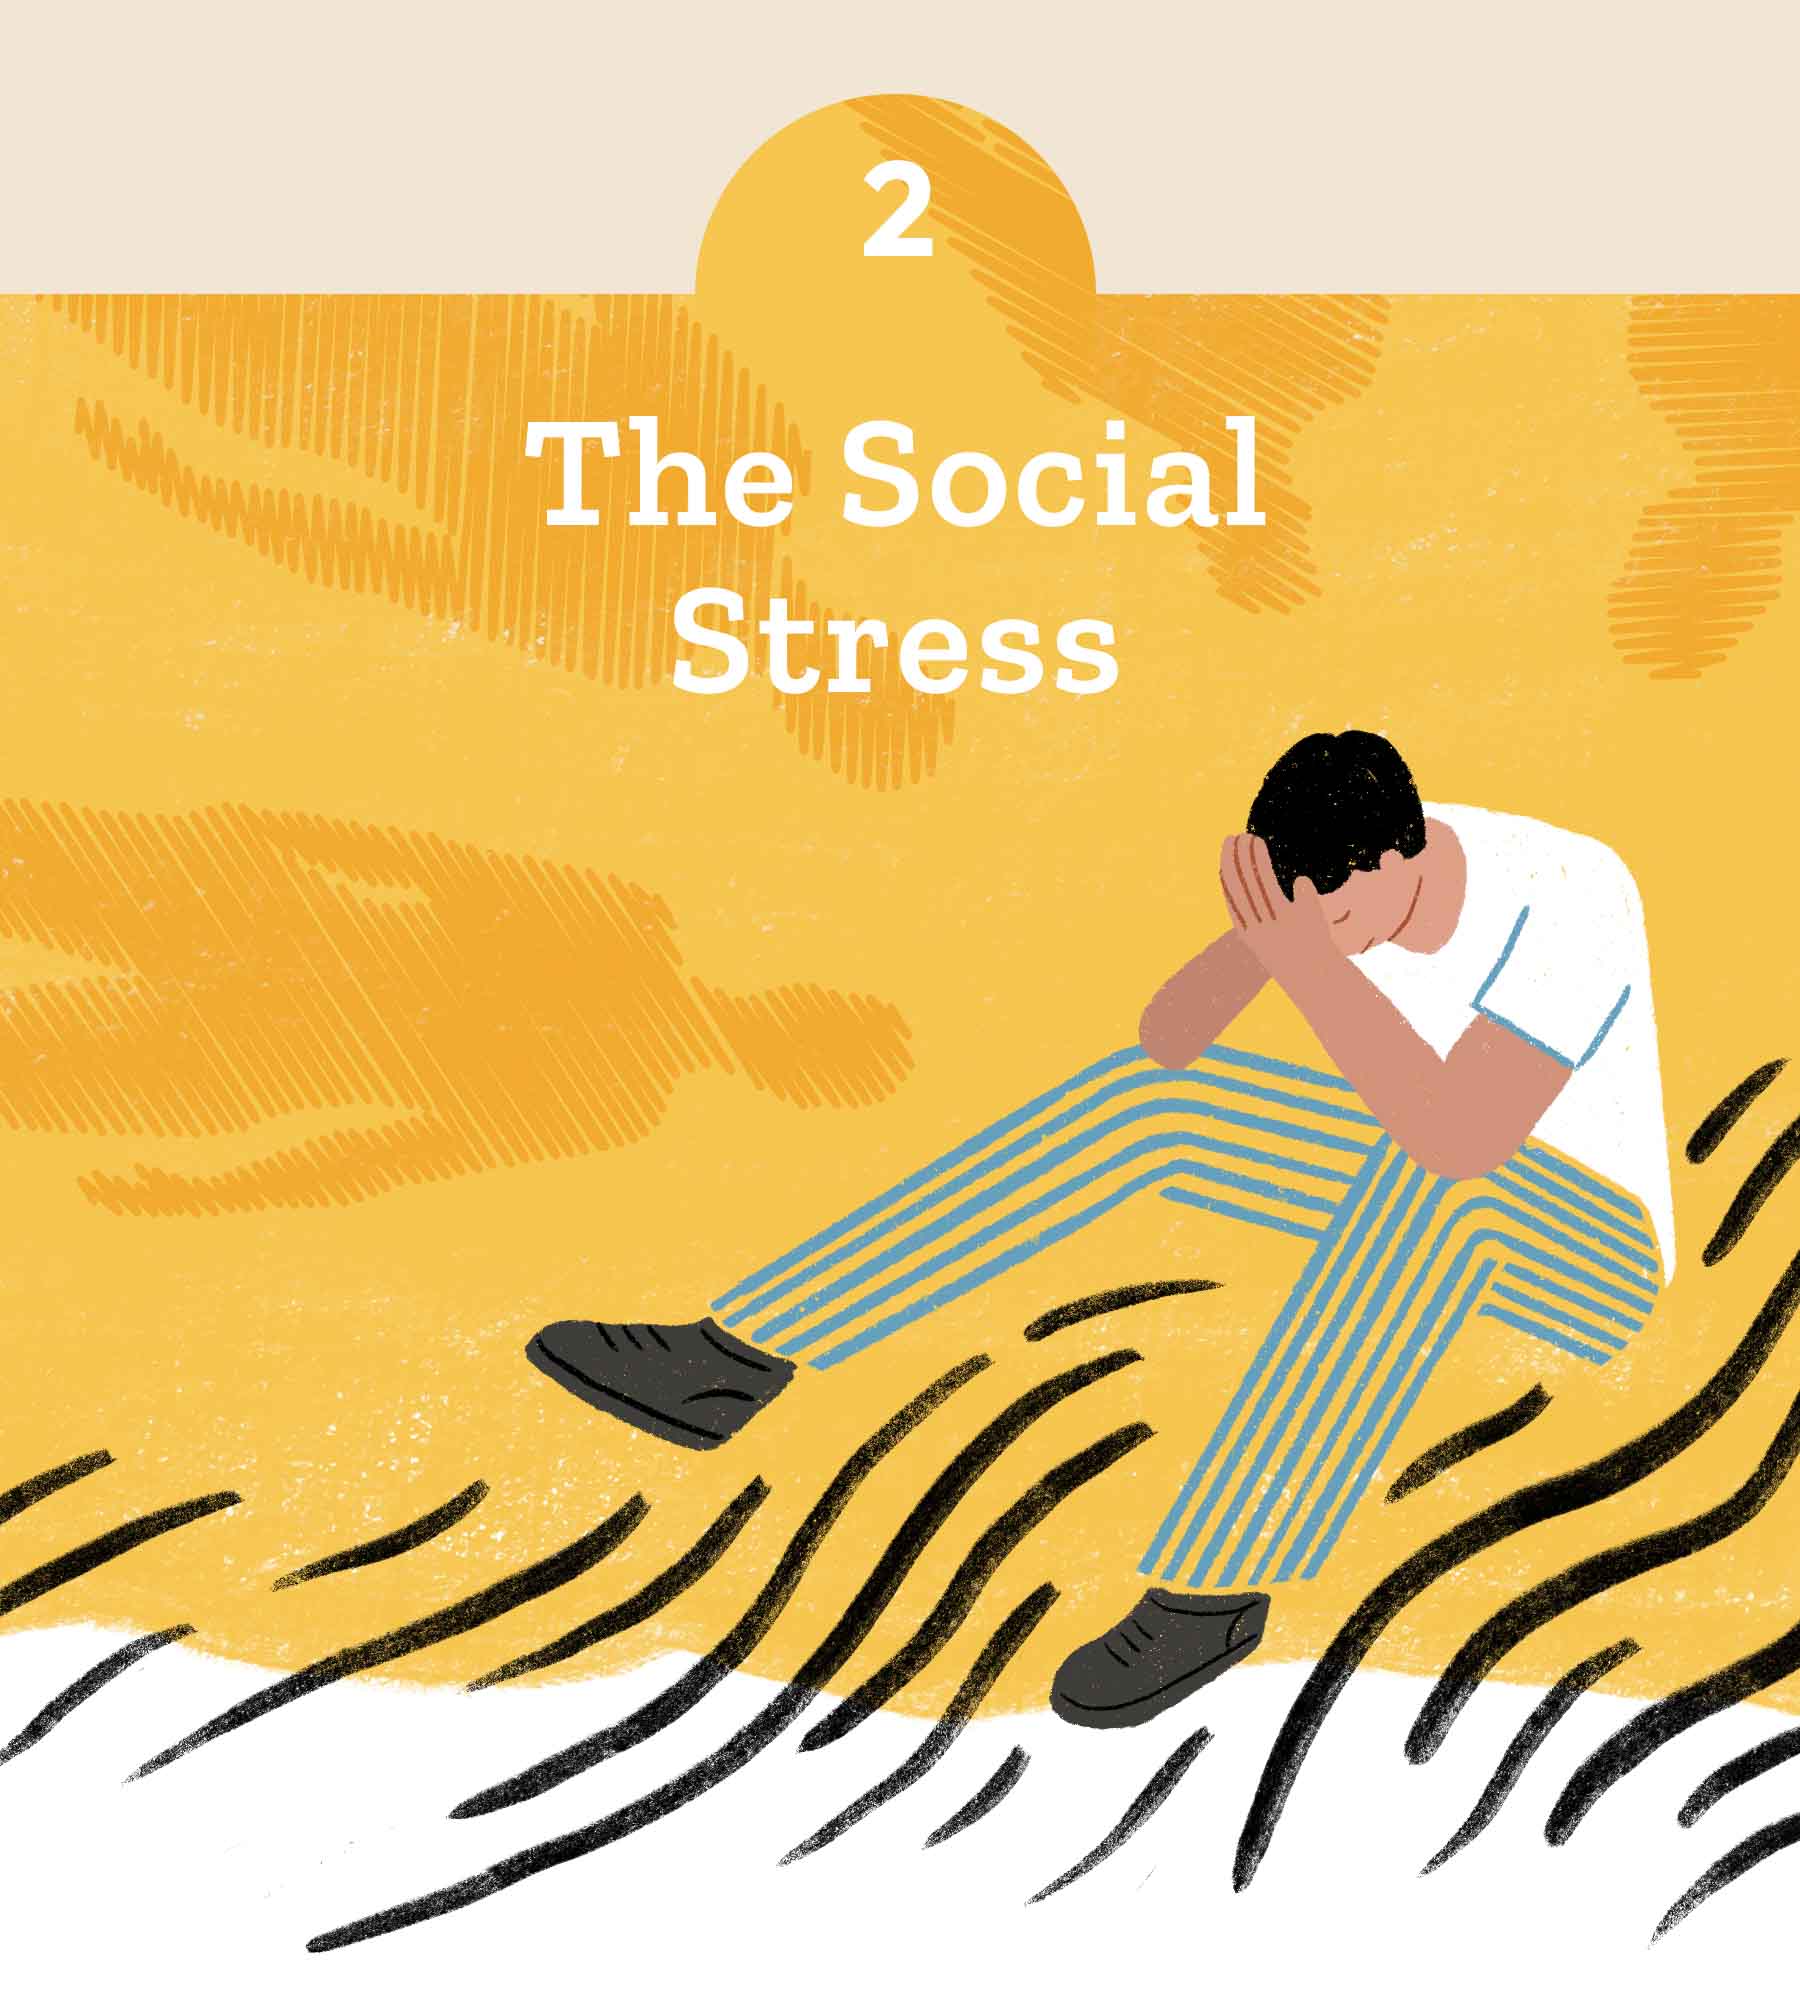 2. The Social Stress